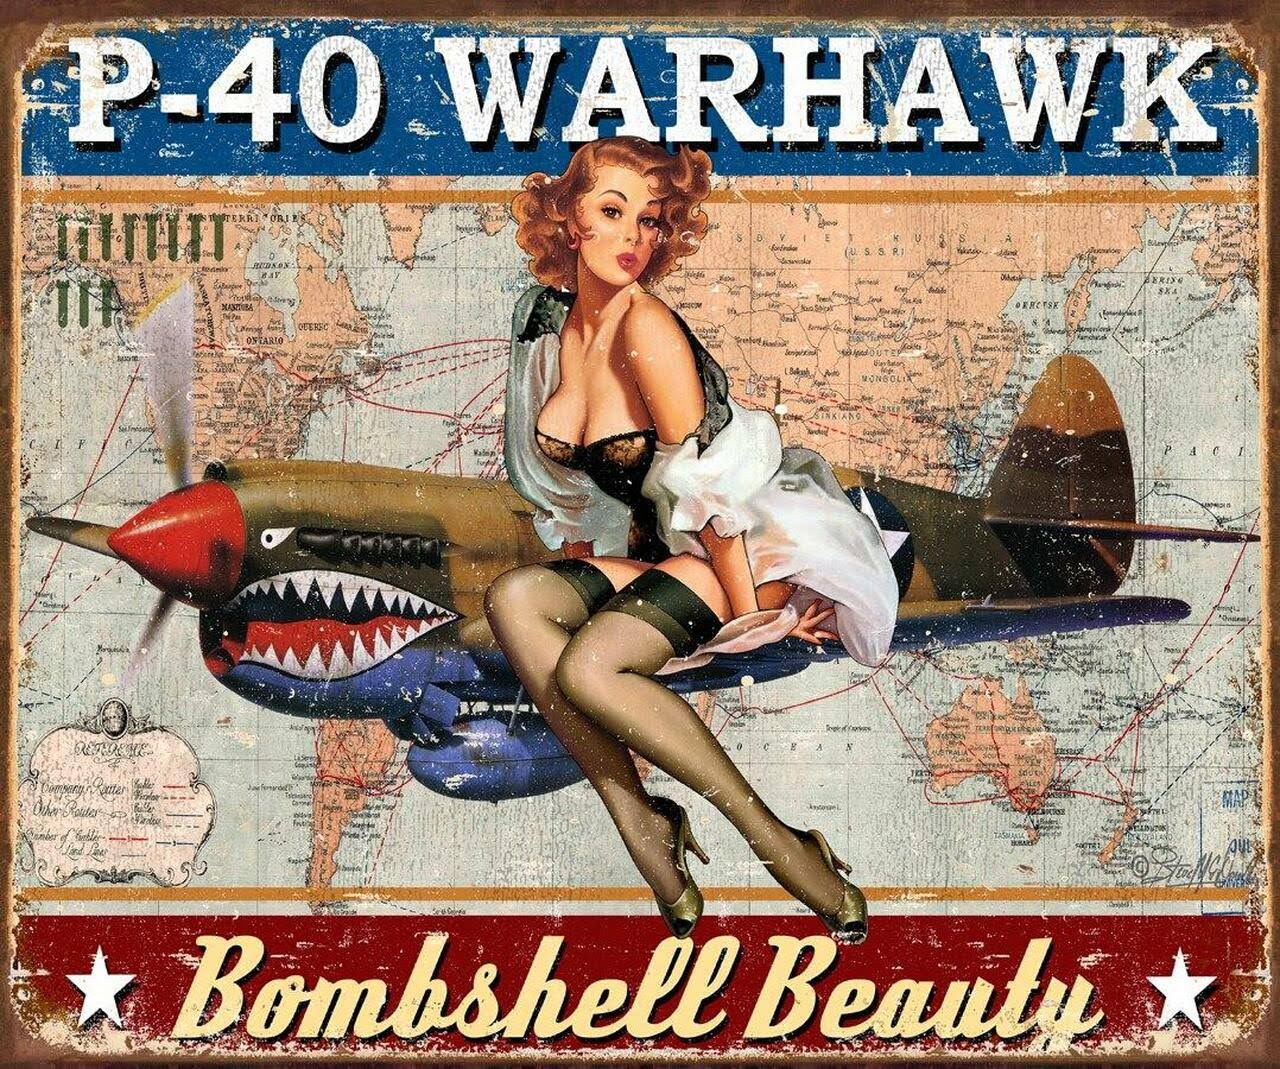 Desperate Signs - P-40 Warhawk - Bomshell Beauty Tin Sign (2460)